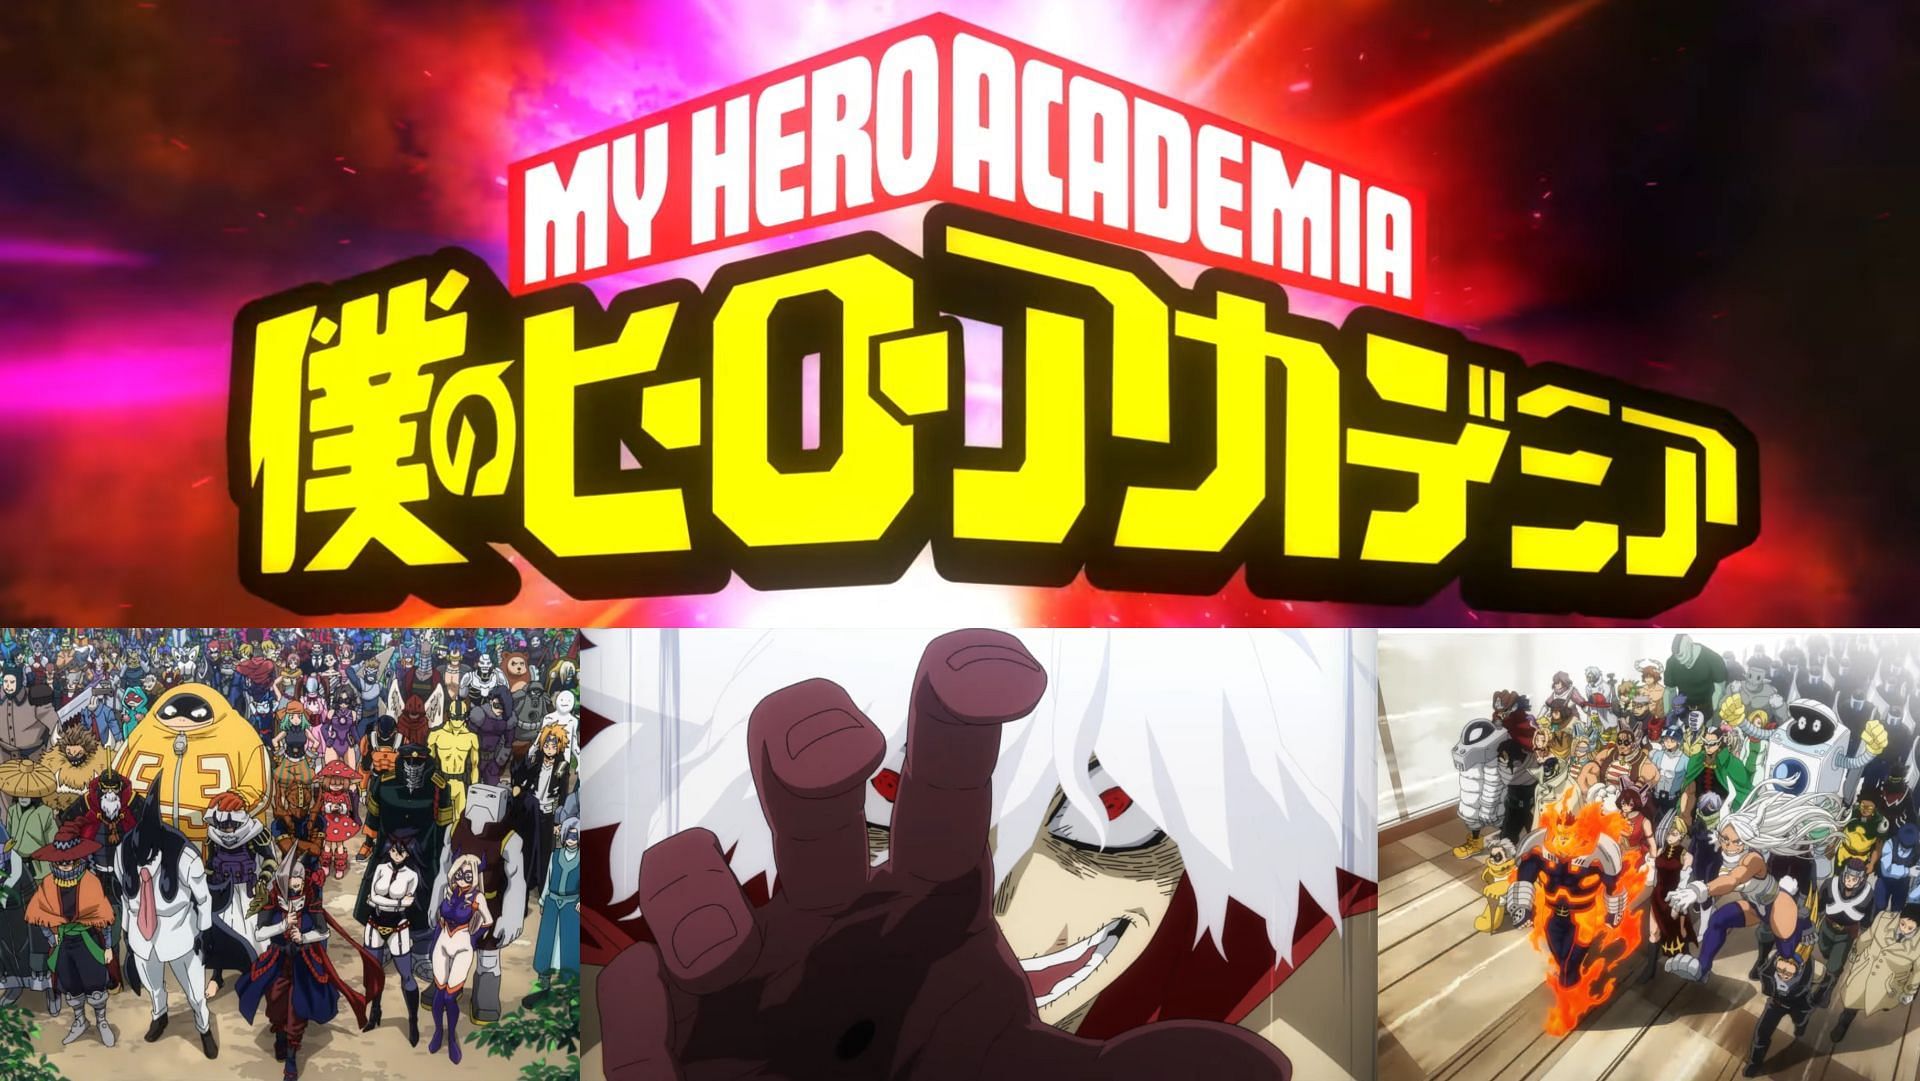 My Hero Academia S06 Hits Crunchyroll This October: Trailer, Key Art